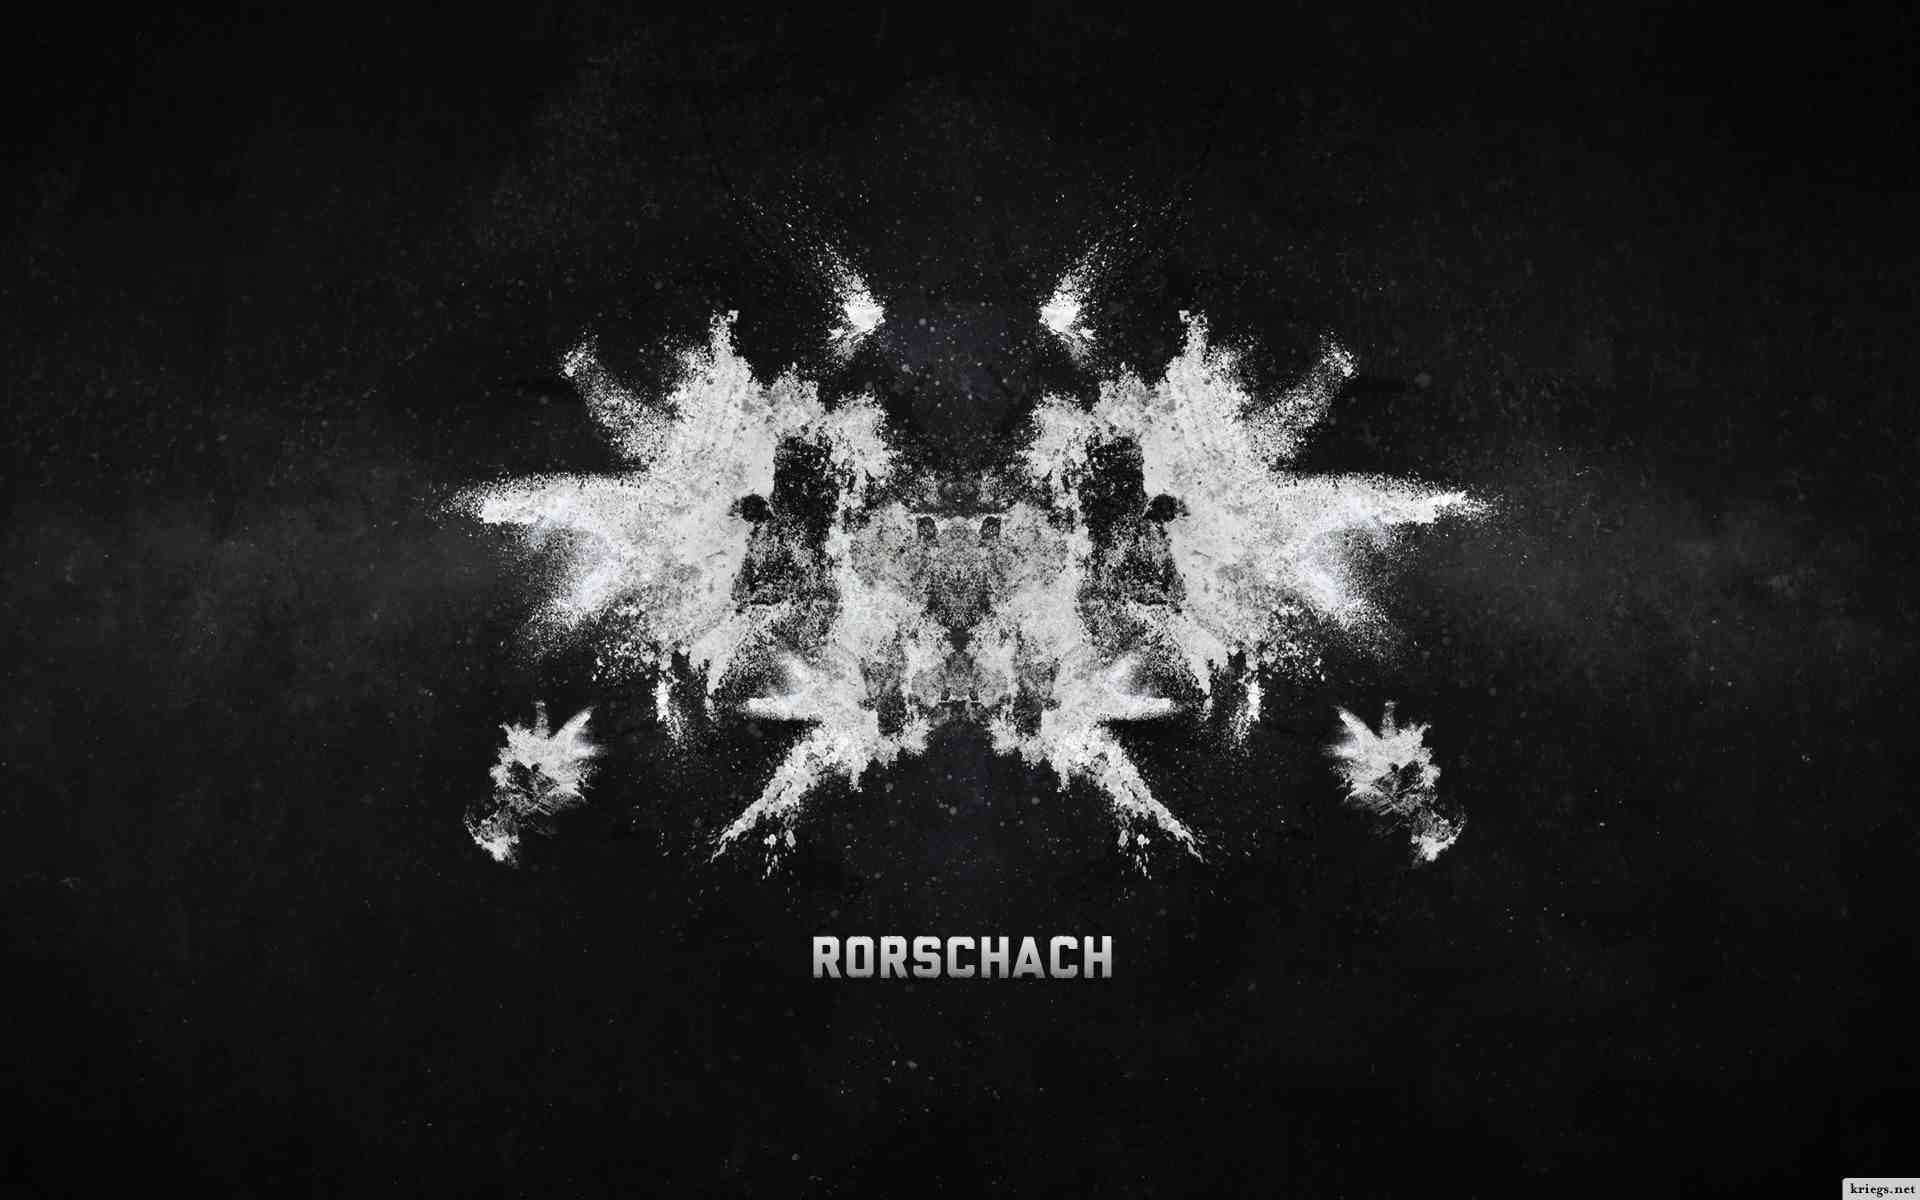 Rorschach text overlay, Rorschach test, monochrome, artwork, symmetry